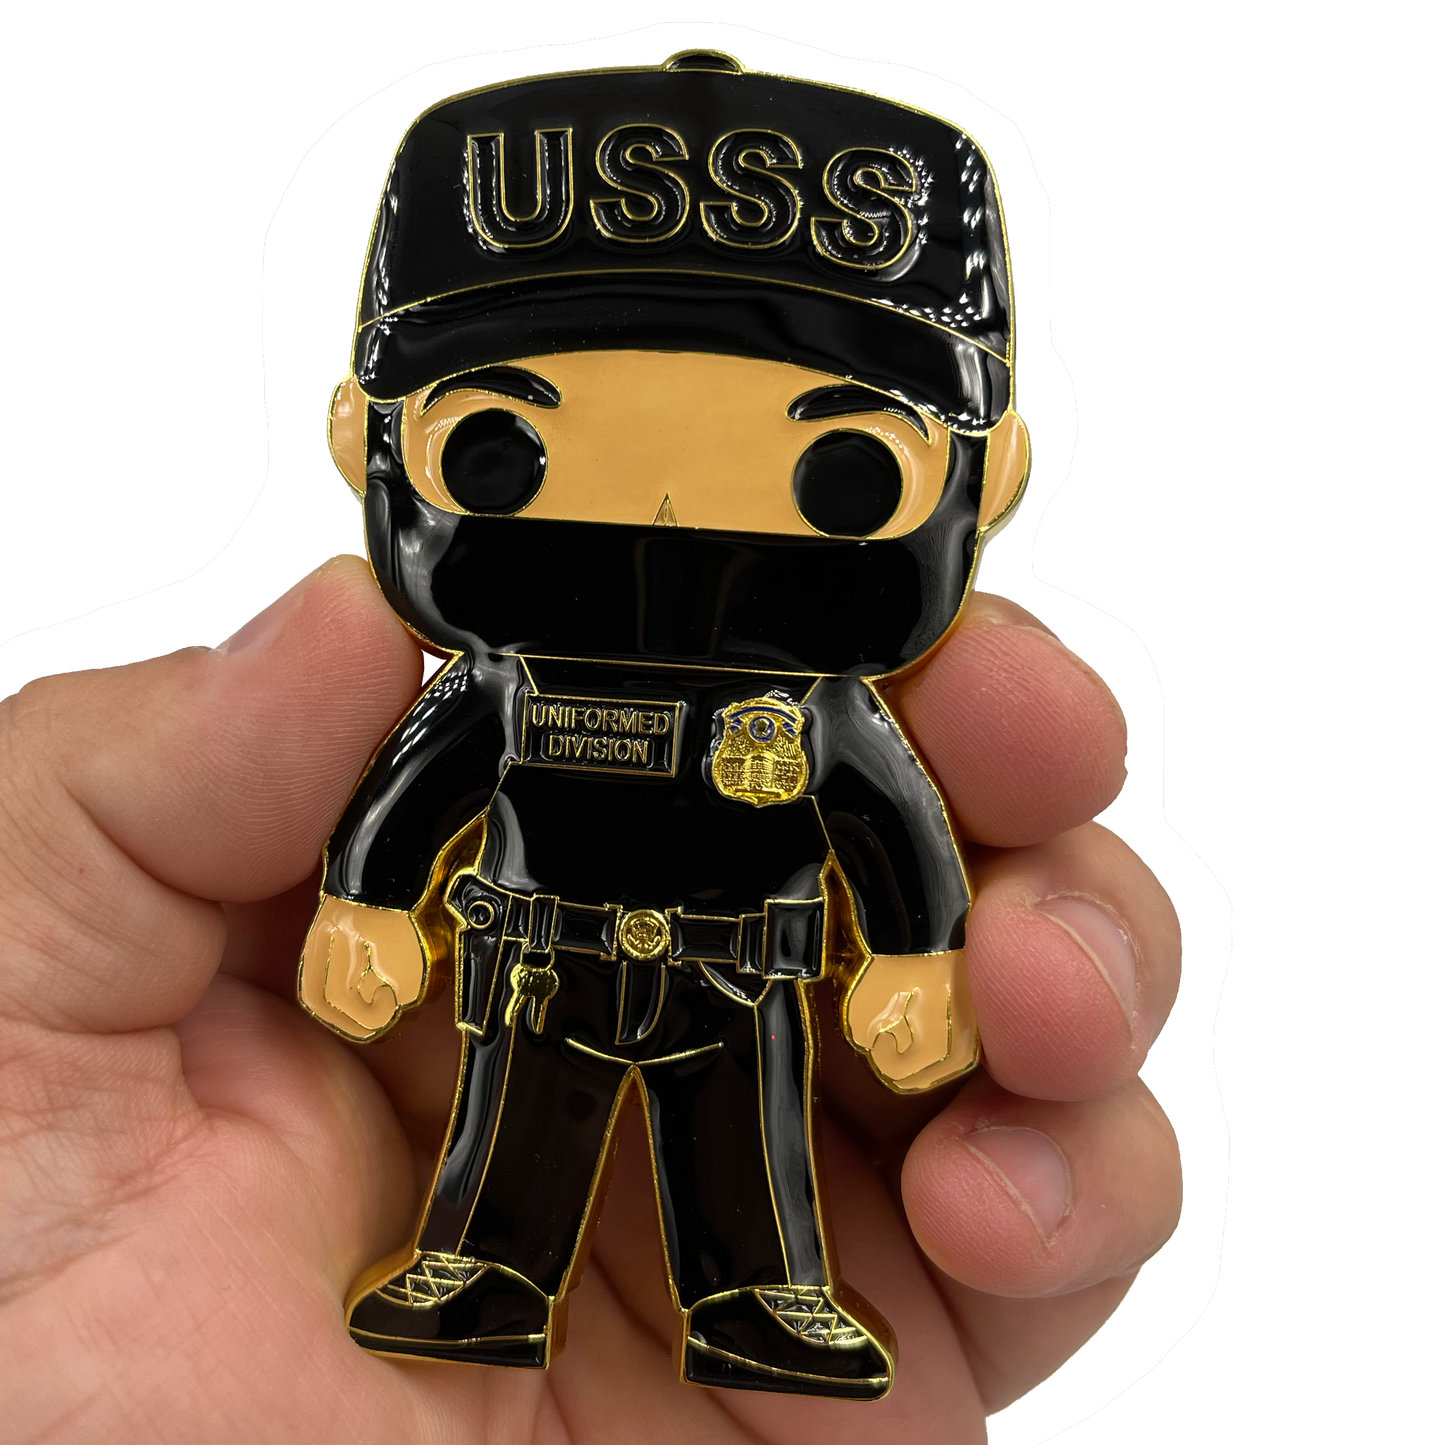 EL9-015 Secret Service Counter Assault Team CAT Officer Uniformed Division USSS Agent Self Standing Thin Blue Line Challenge Coin